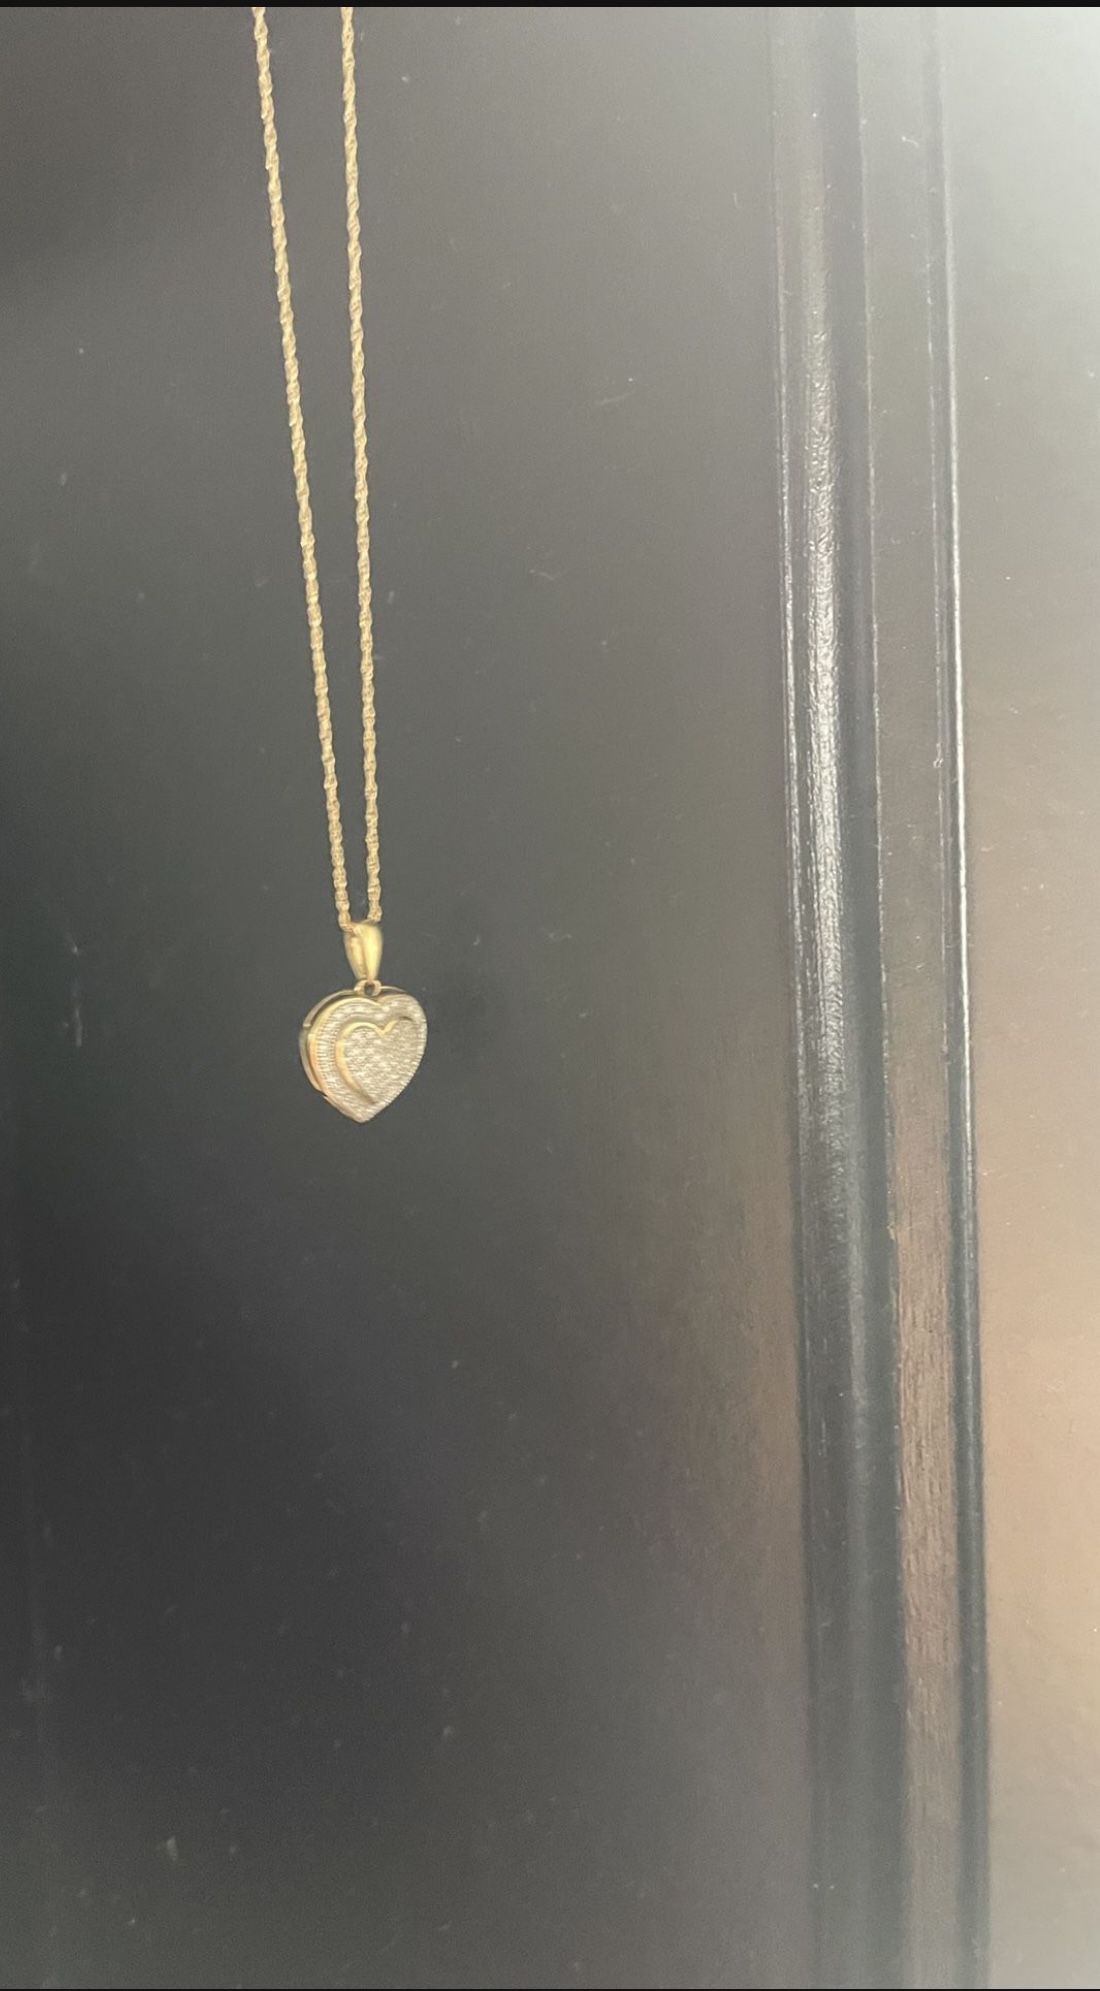 10 Karat Gold Necklace + Diamond Heart 